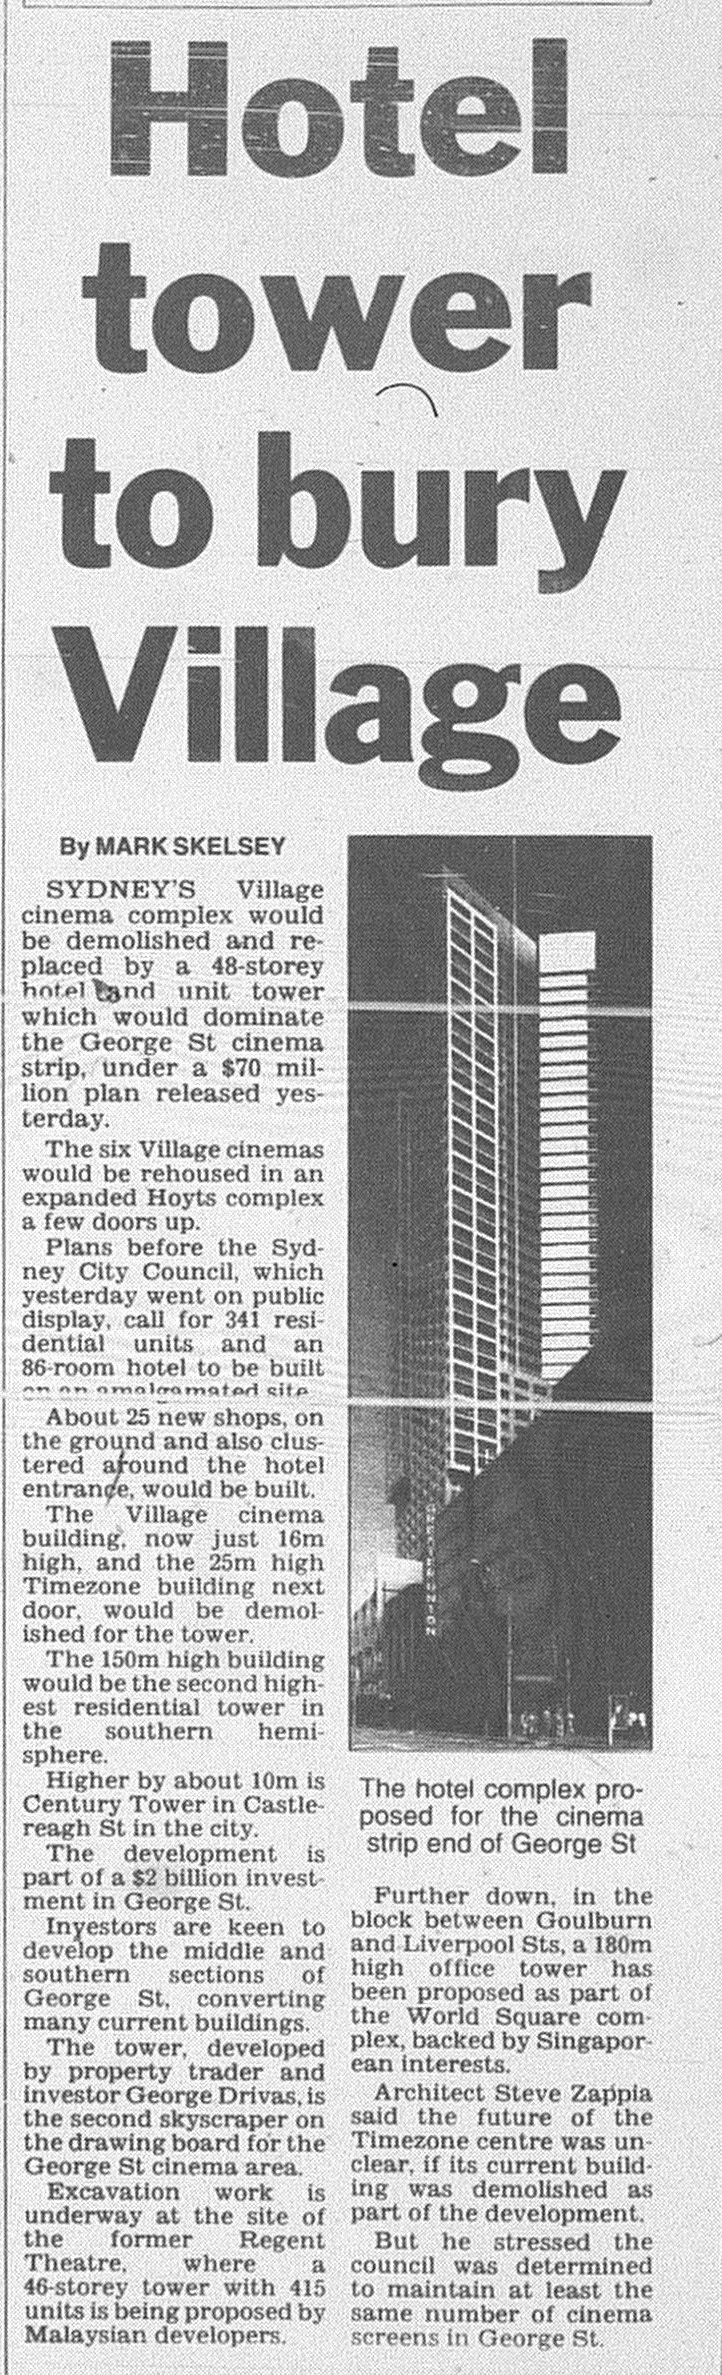 Meriton Tower April 17 1998 daily telegraph 6